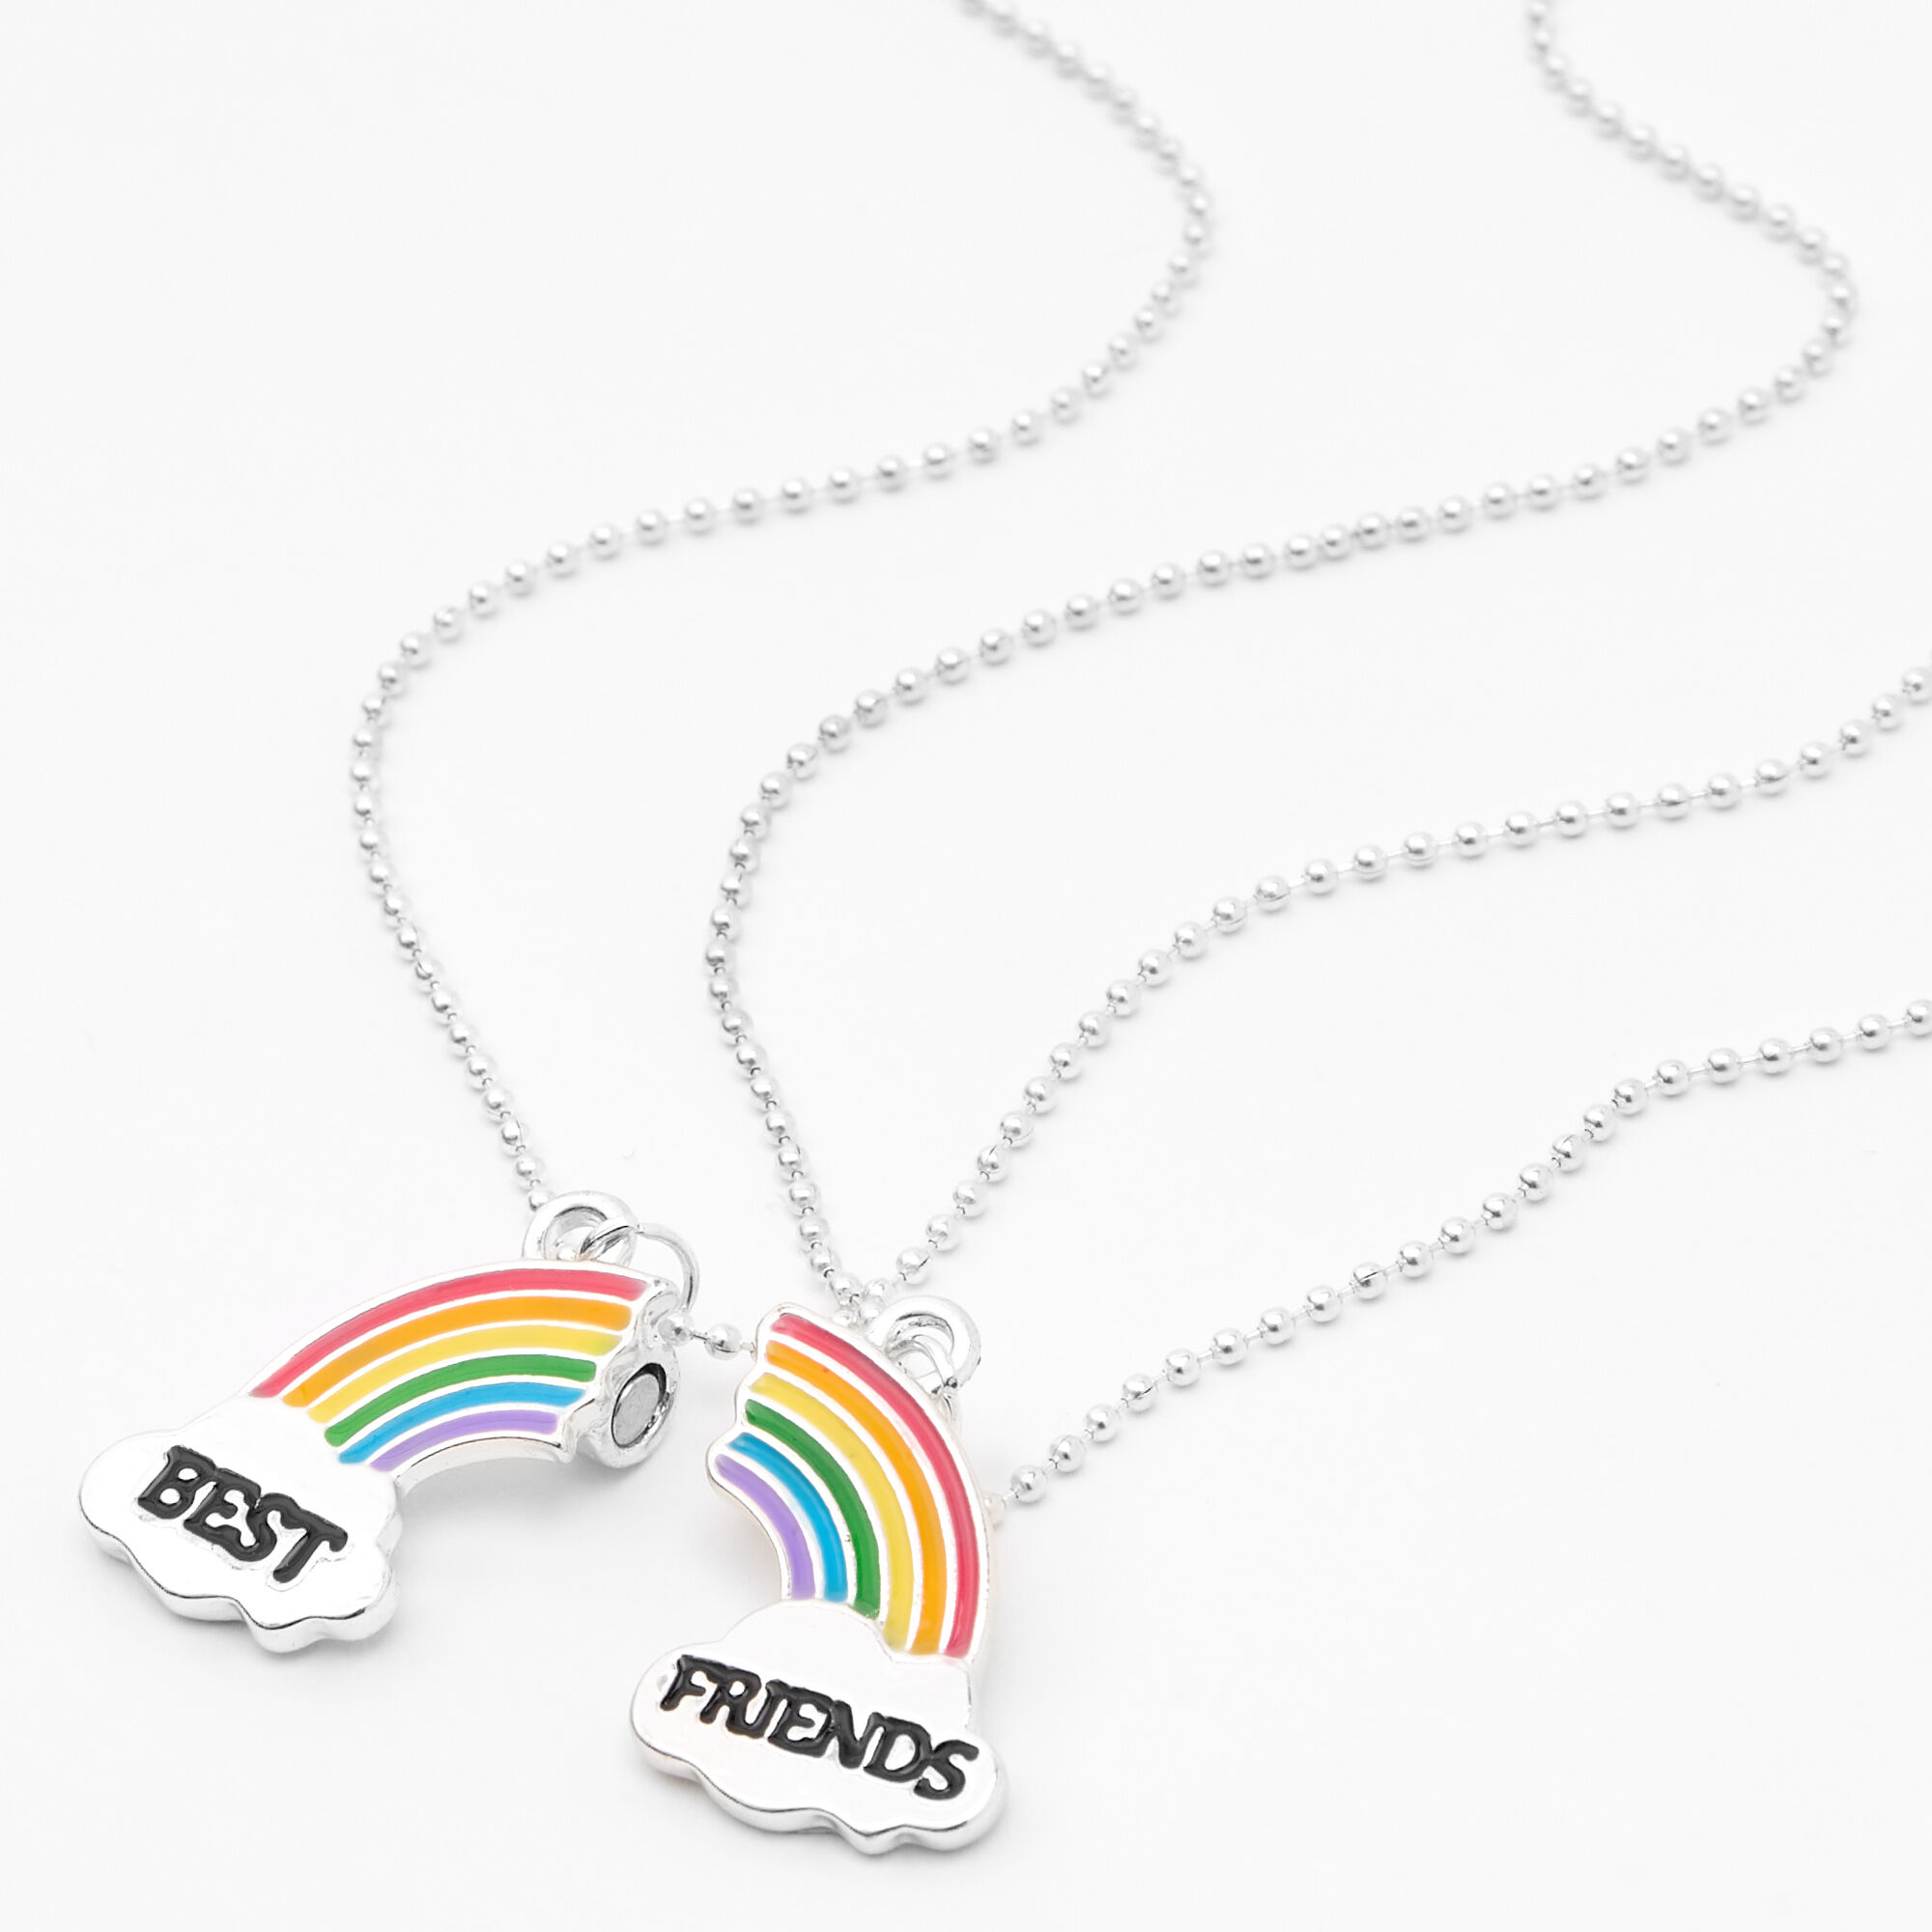 View Claires Best Friends Broken Rainbow Pendant Necklaces 2 Pack Silver information